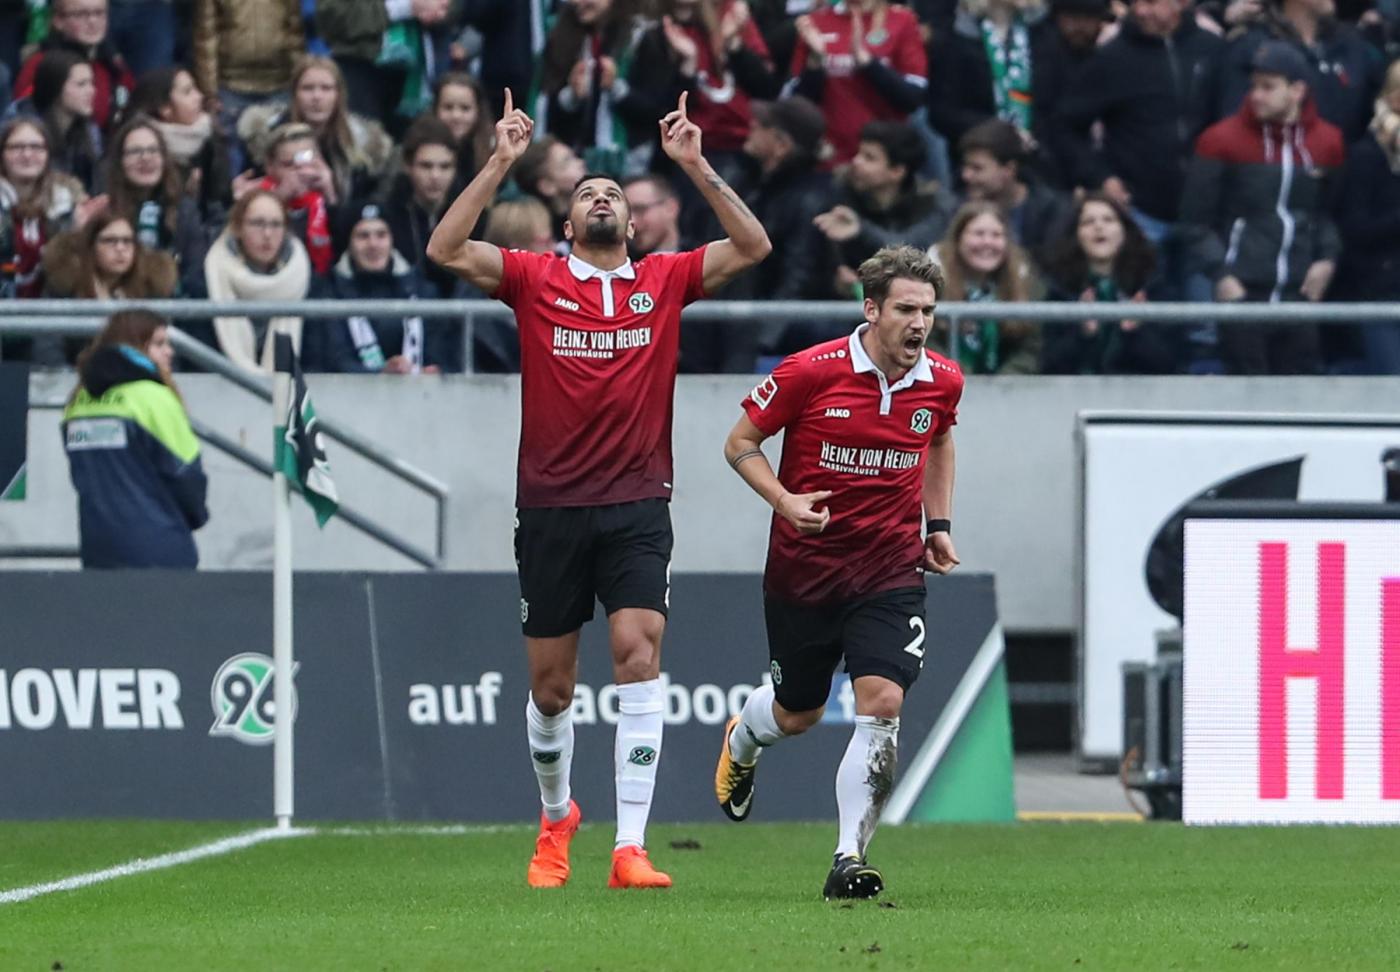 Hannover-Hoffenheim 10 dicembre, analisi e pronostico Bundesliga giornata 15